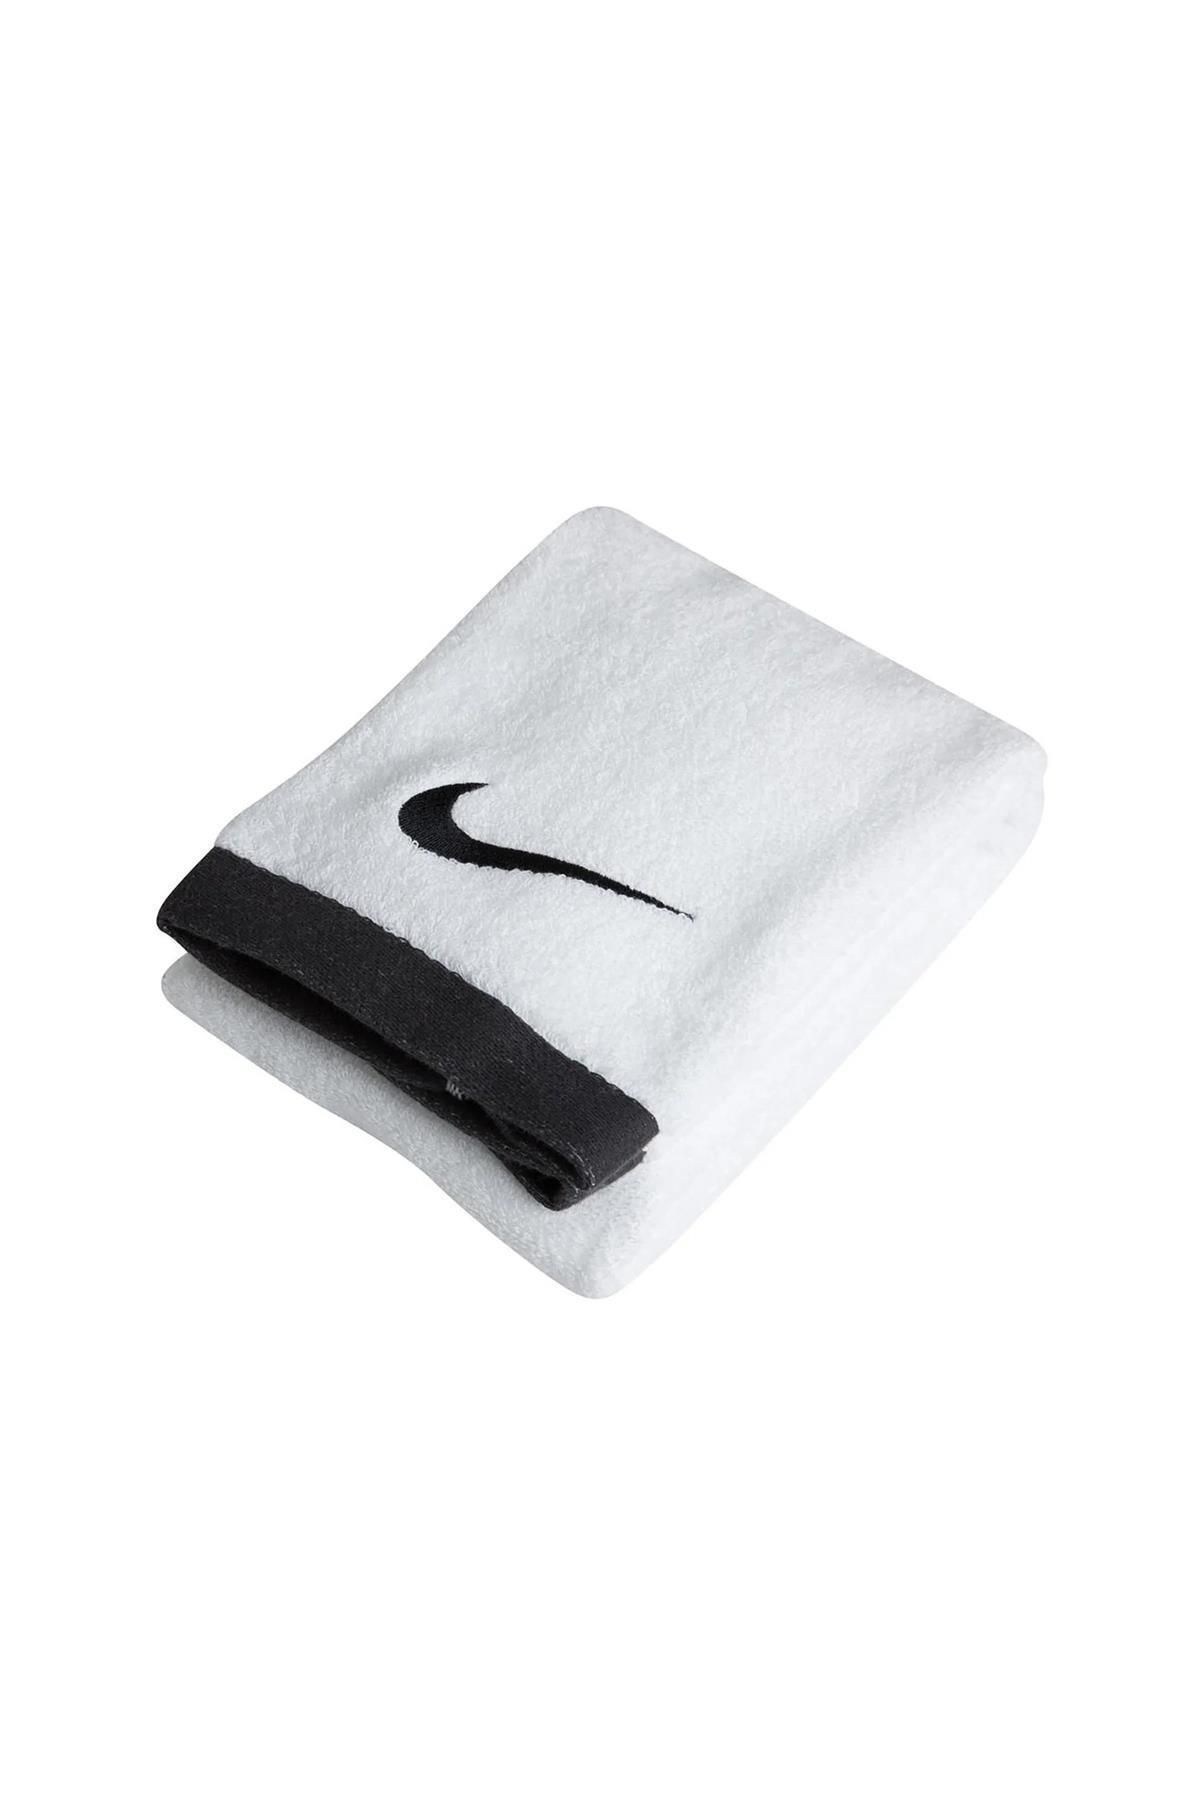 Nike Fundamental Towel Beyaz Havlu